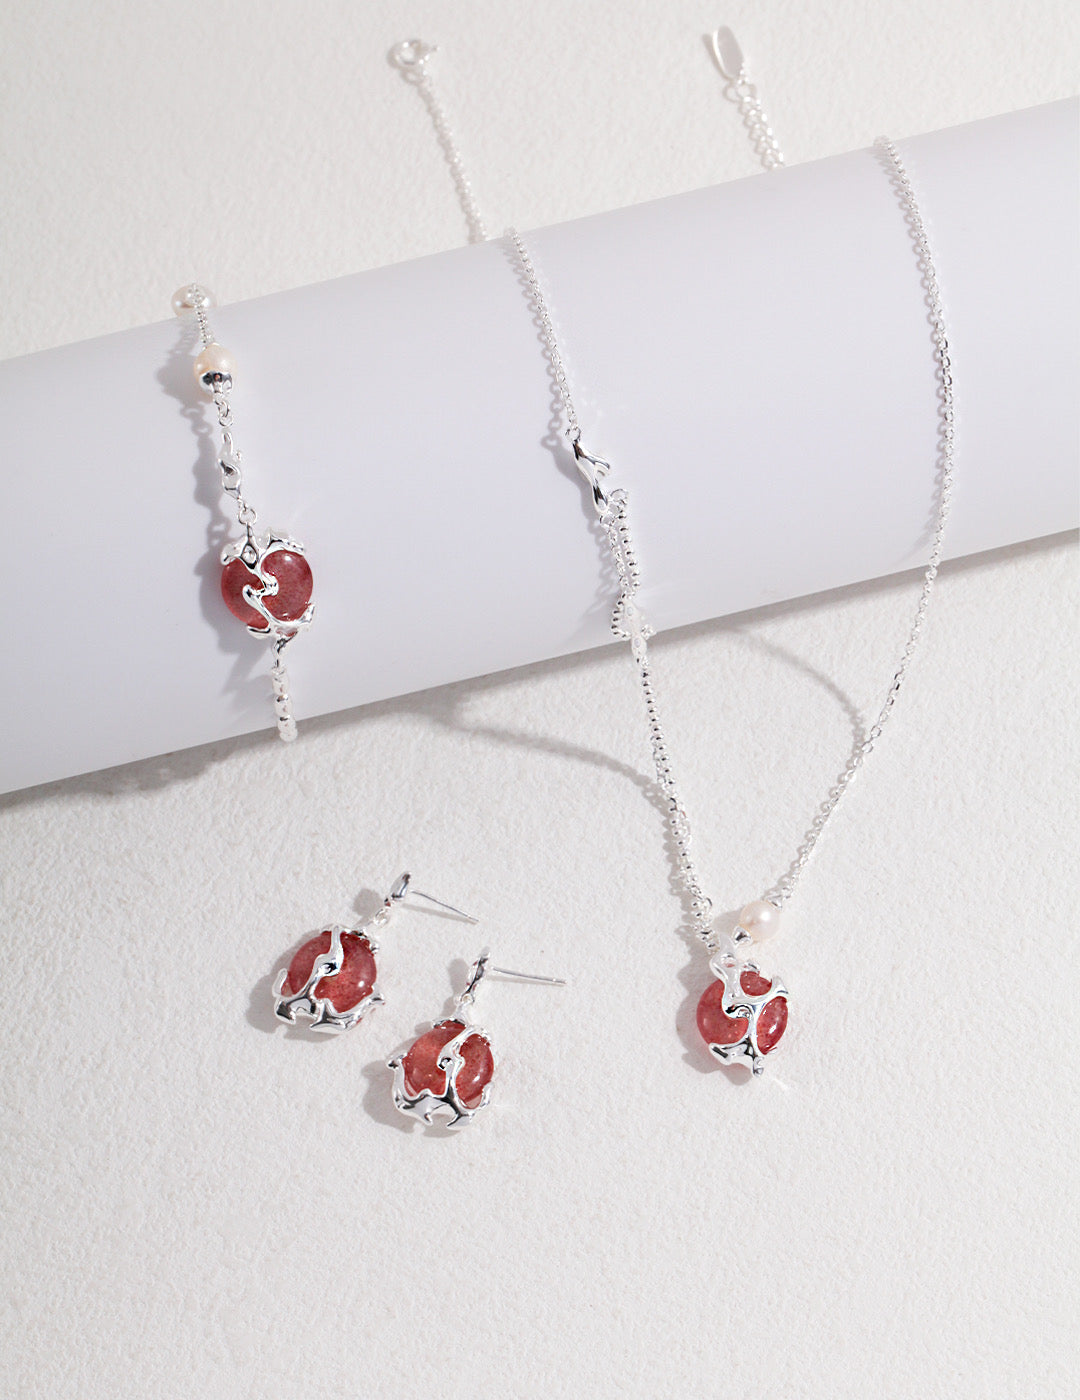 A set of strawberry quartz jewelry on white table